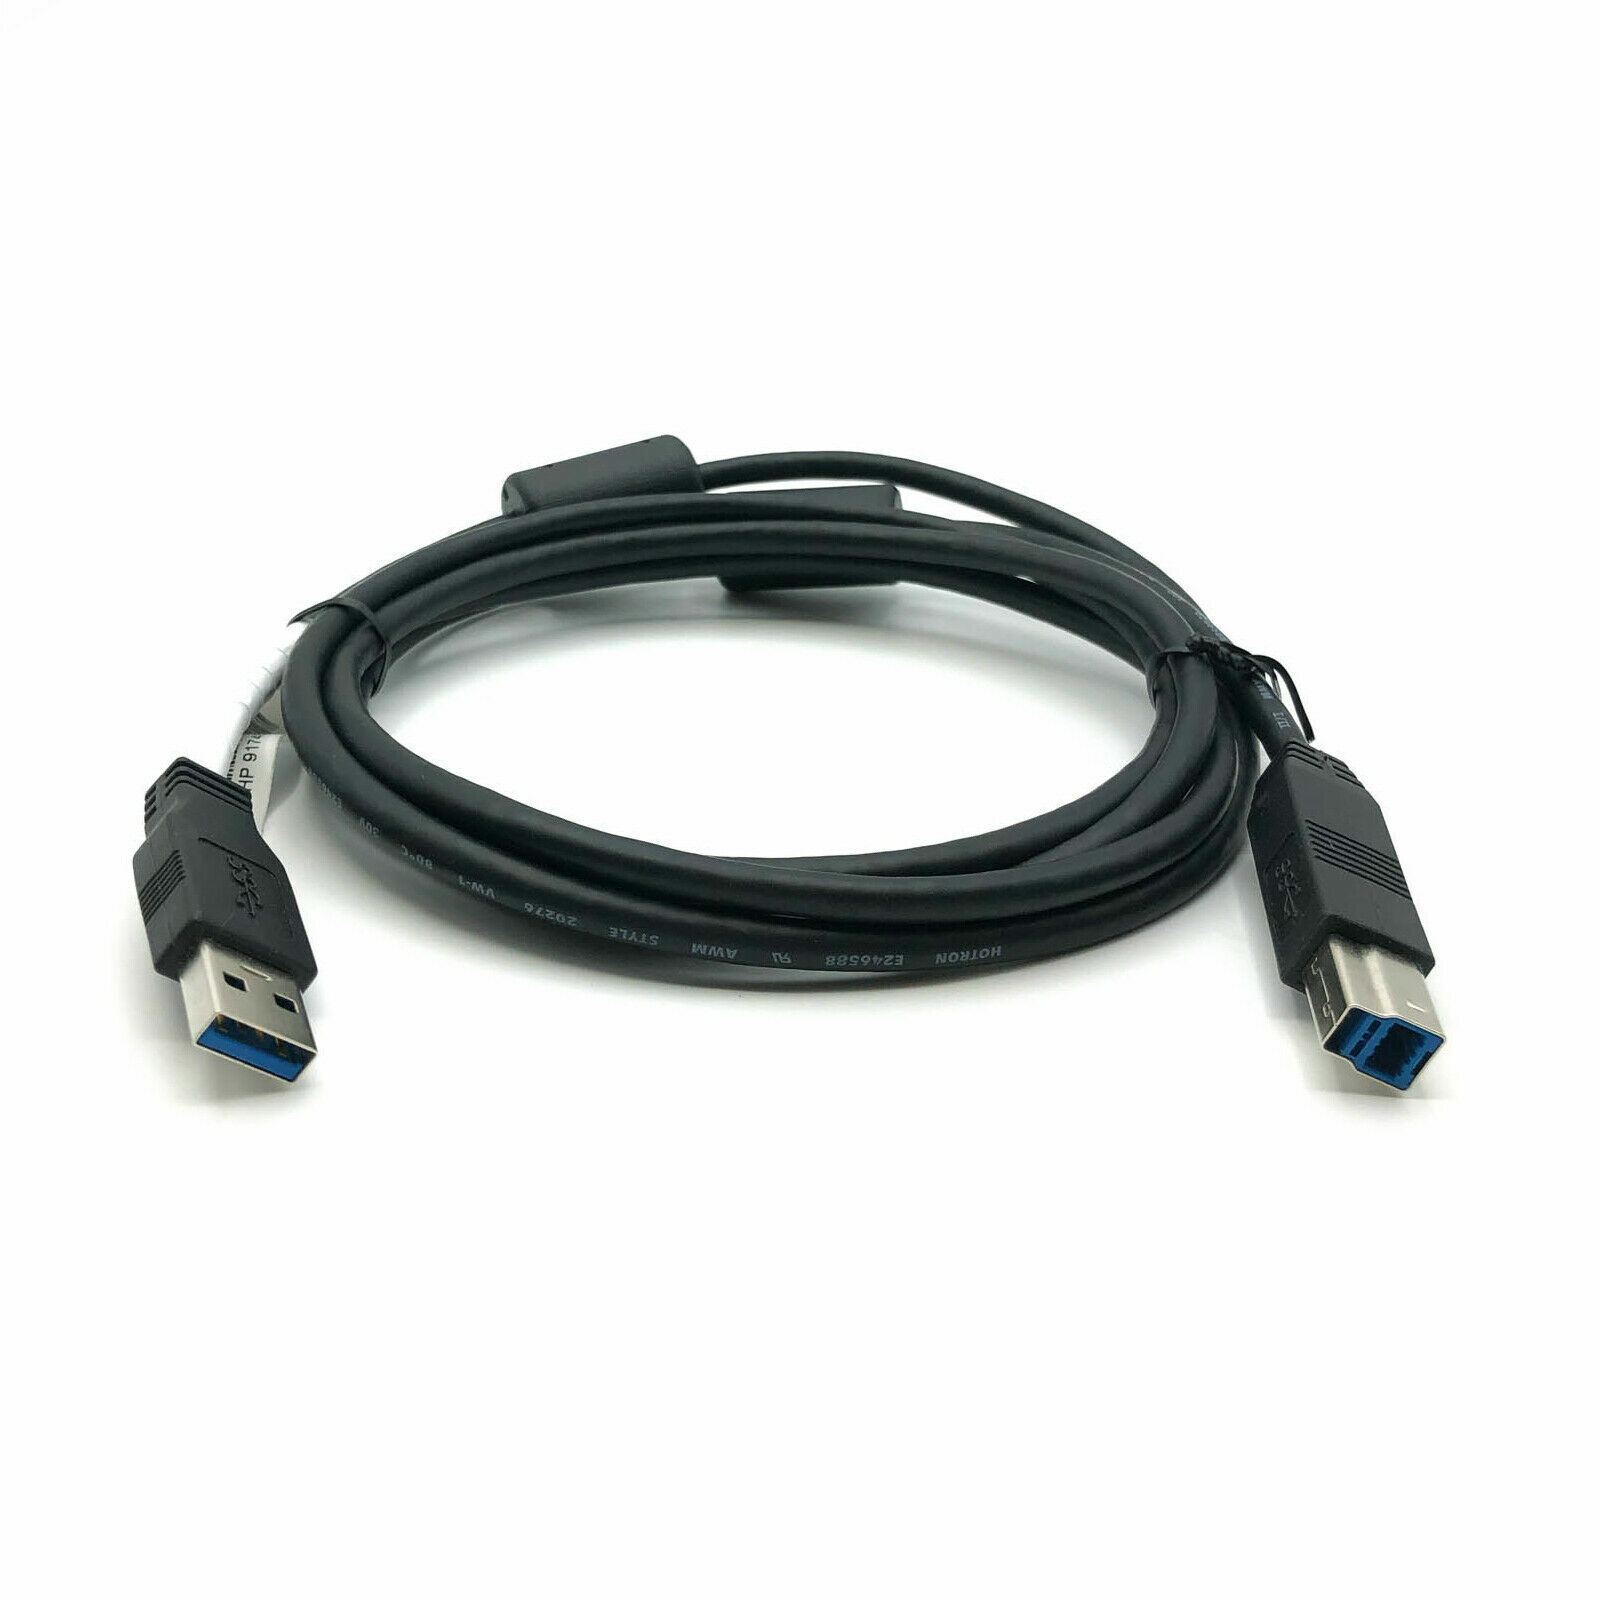 NEW Fujitsu USB 3.0 A Male to B Male Cable for Fujitsu fi-7160 fi-7260 Scanner